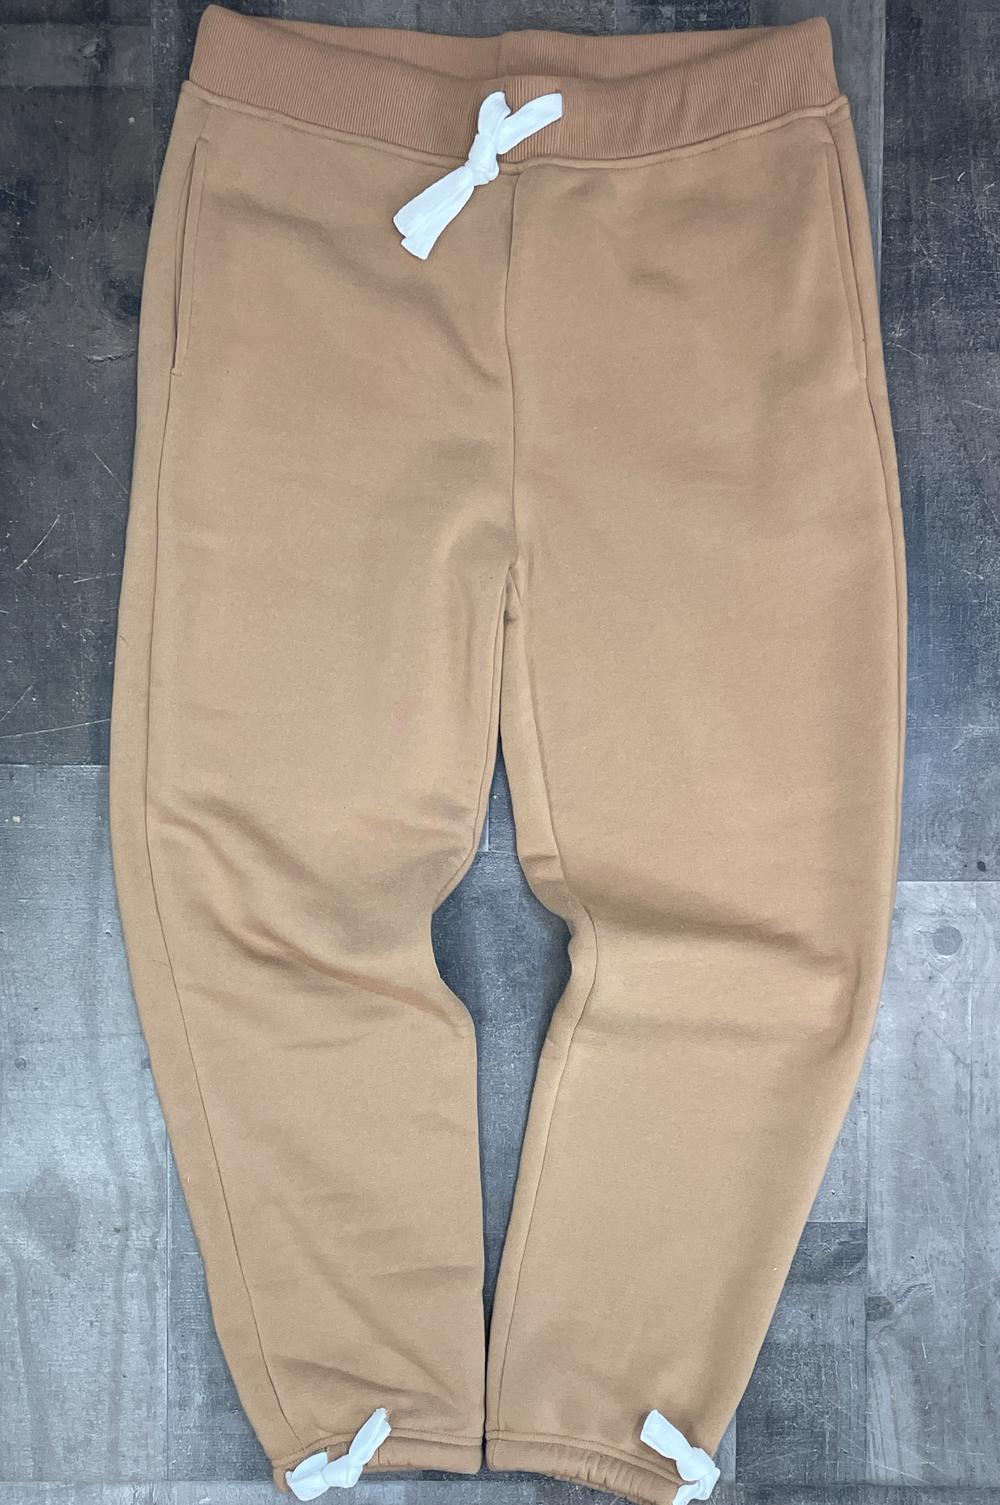 Access - brown sweatpants